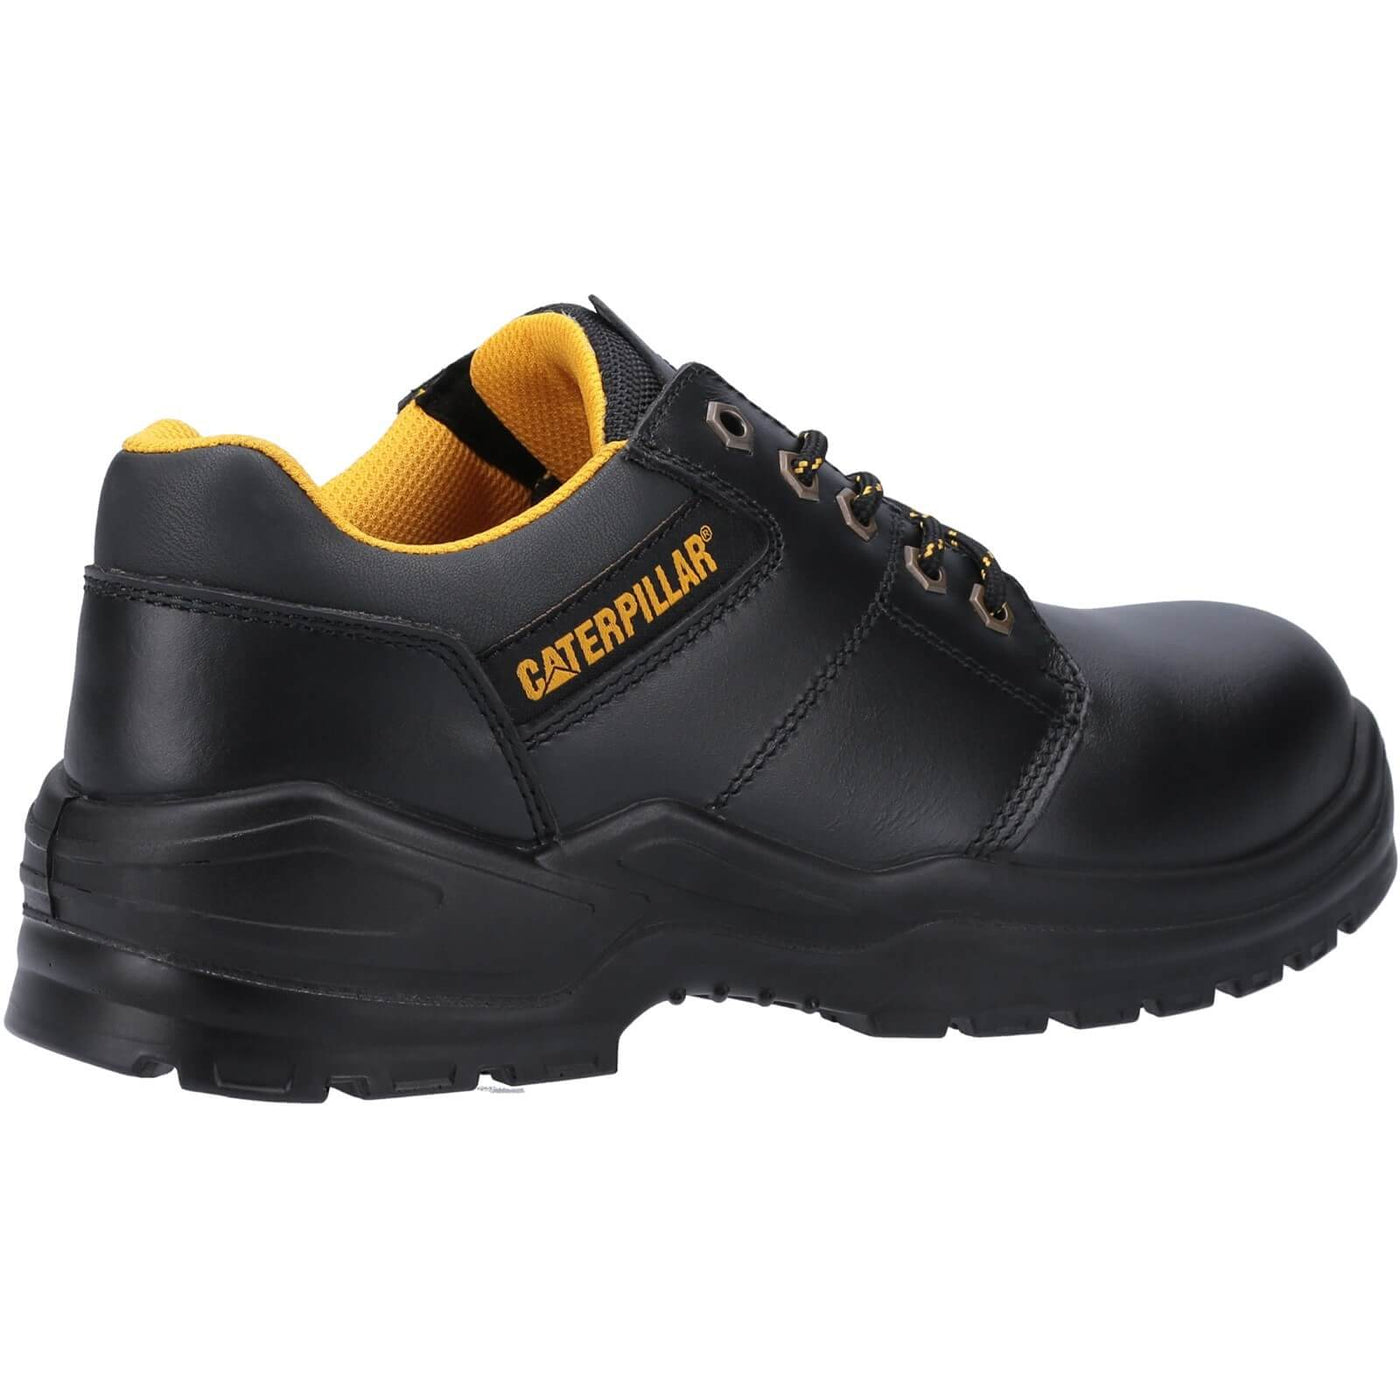 Caterpillar Striver Low S3 Safety Shoes Black 2#colour_black